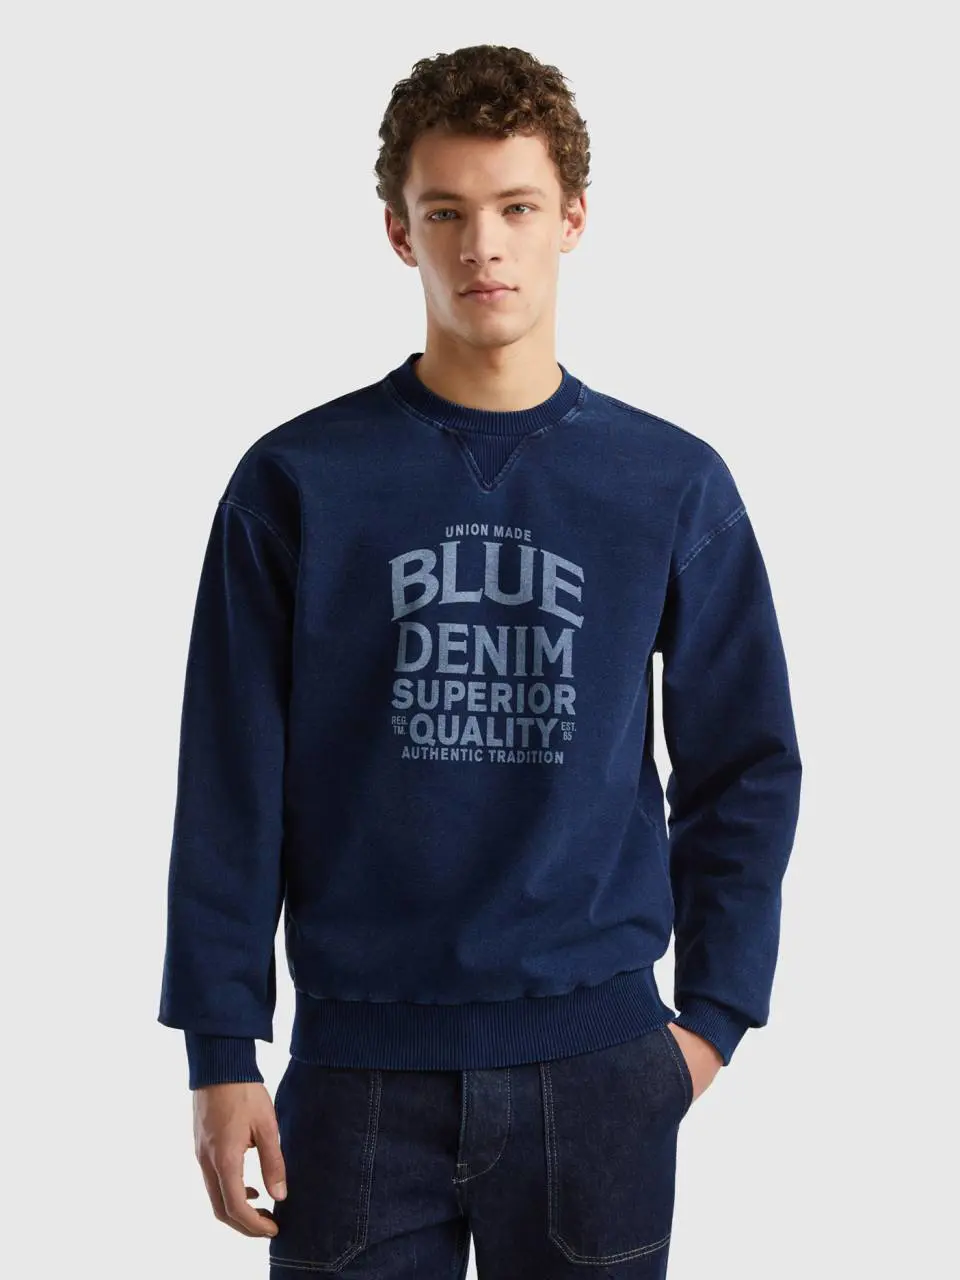 Benetton crew neck sweatshirt with print. 1